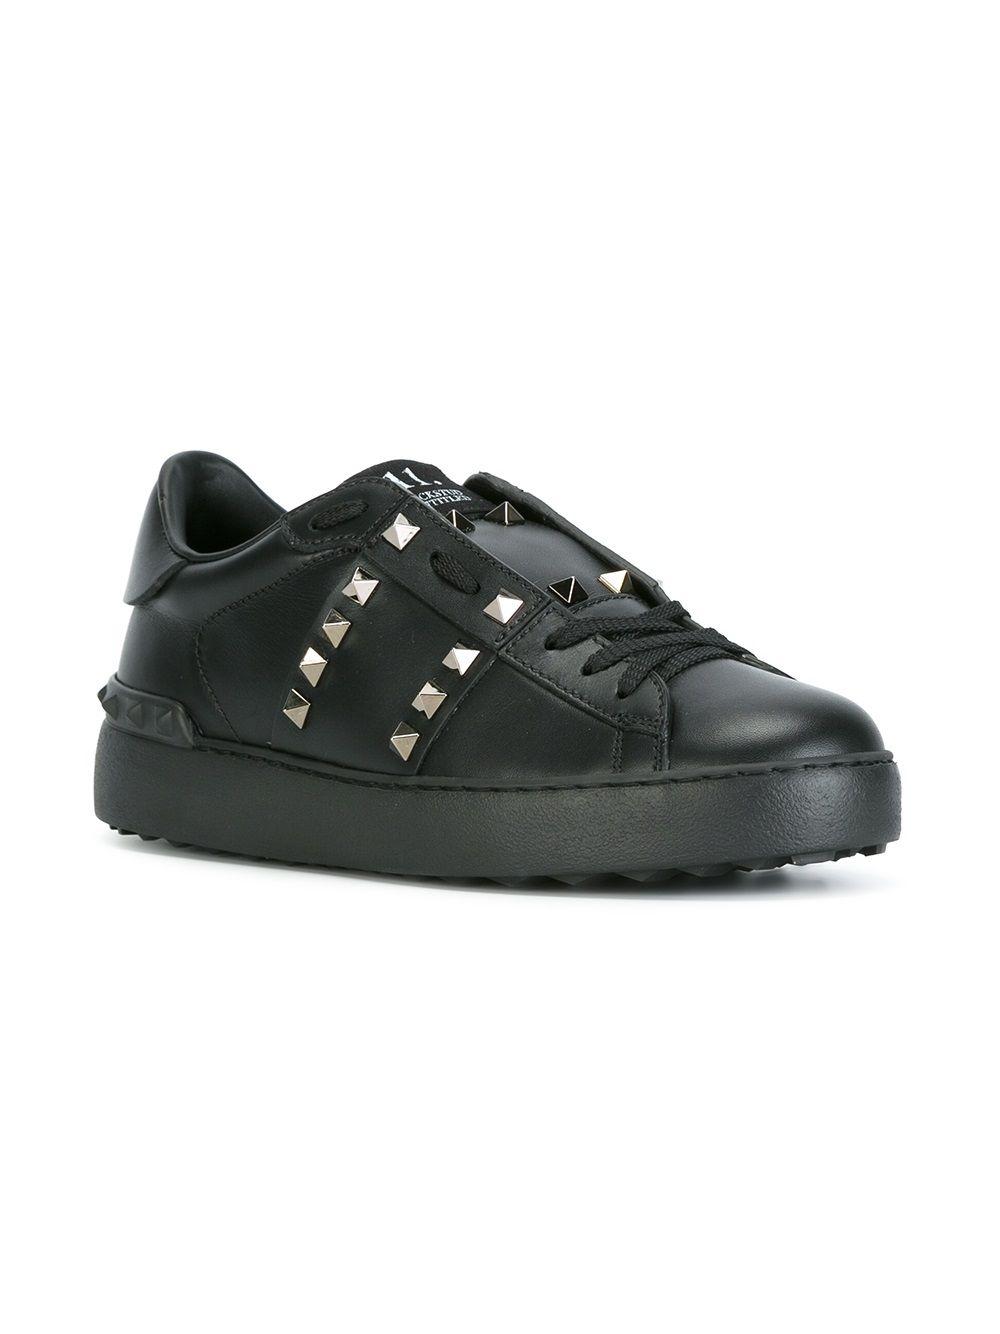 Valentino Garavani Rockstud Untitled Leather Sneakers in Black - Lyst